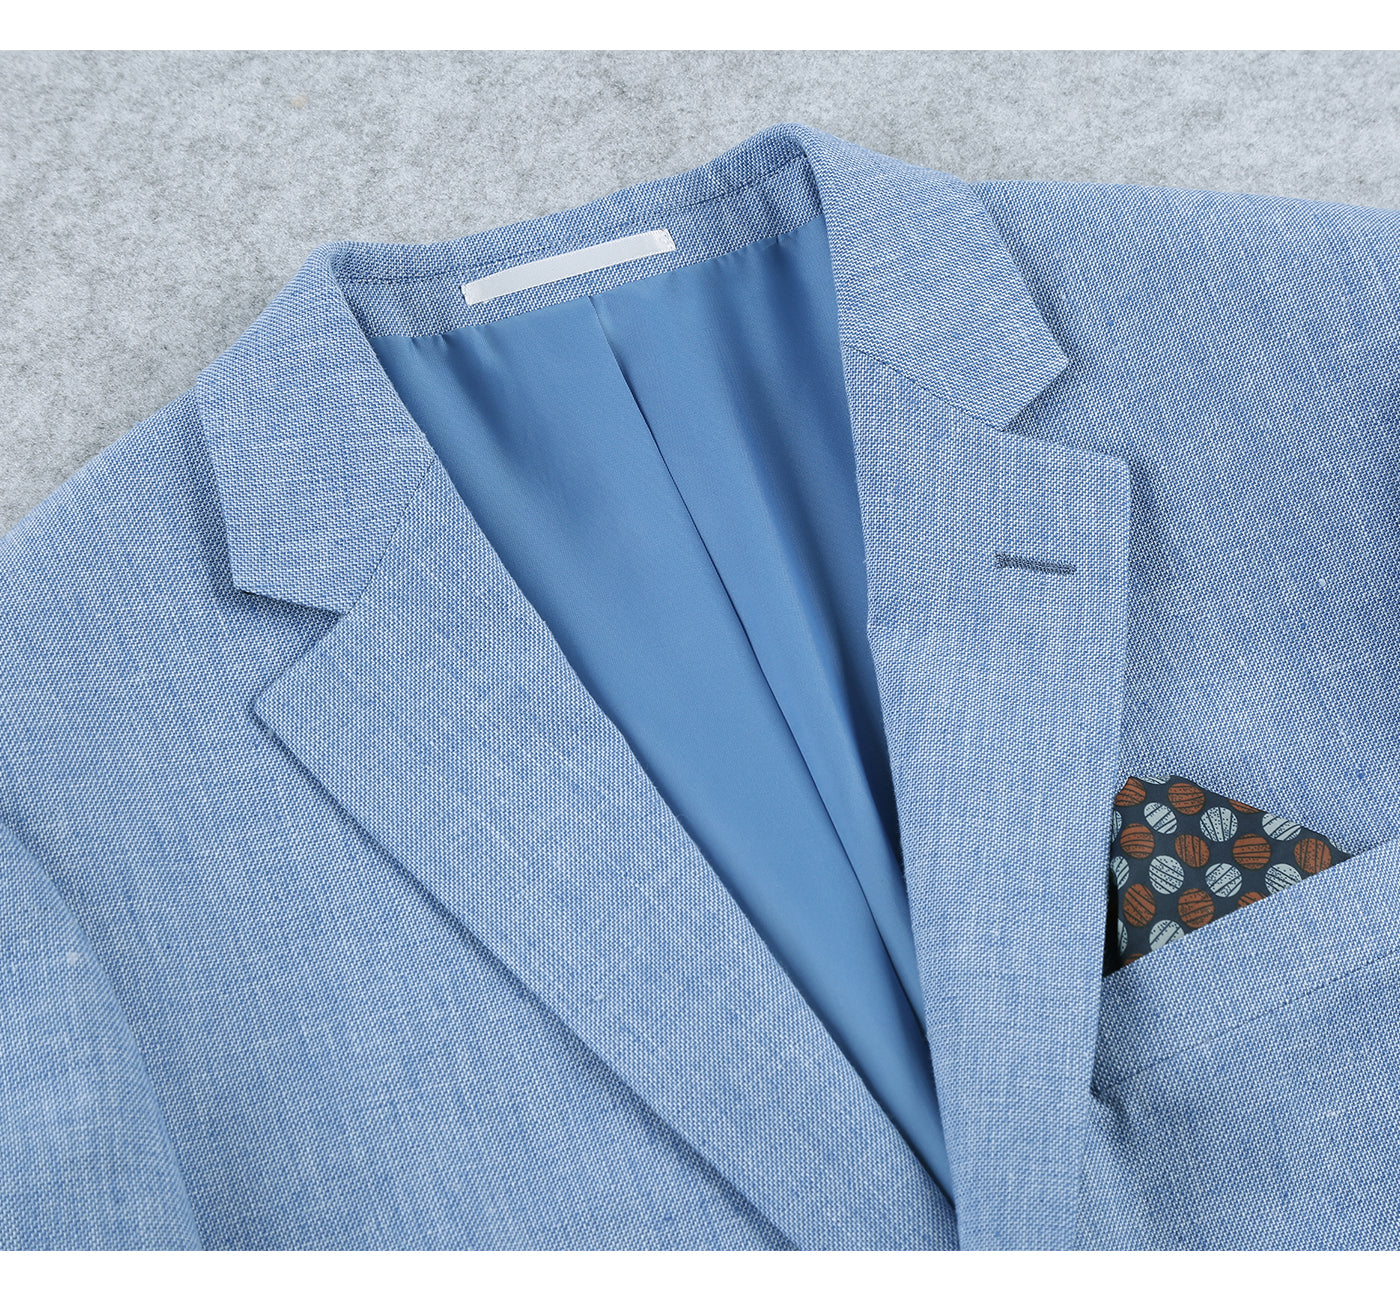 Men's Classic Fit Blazer Linen Cotton Sport Coat for Summer